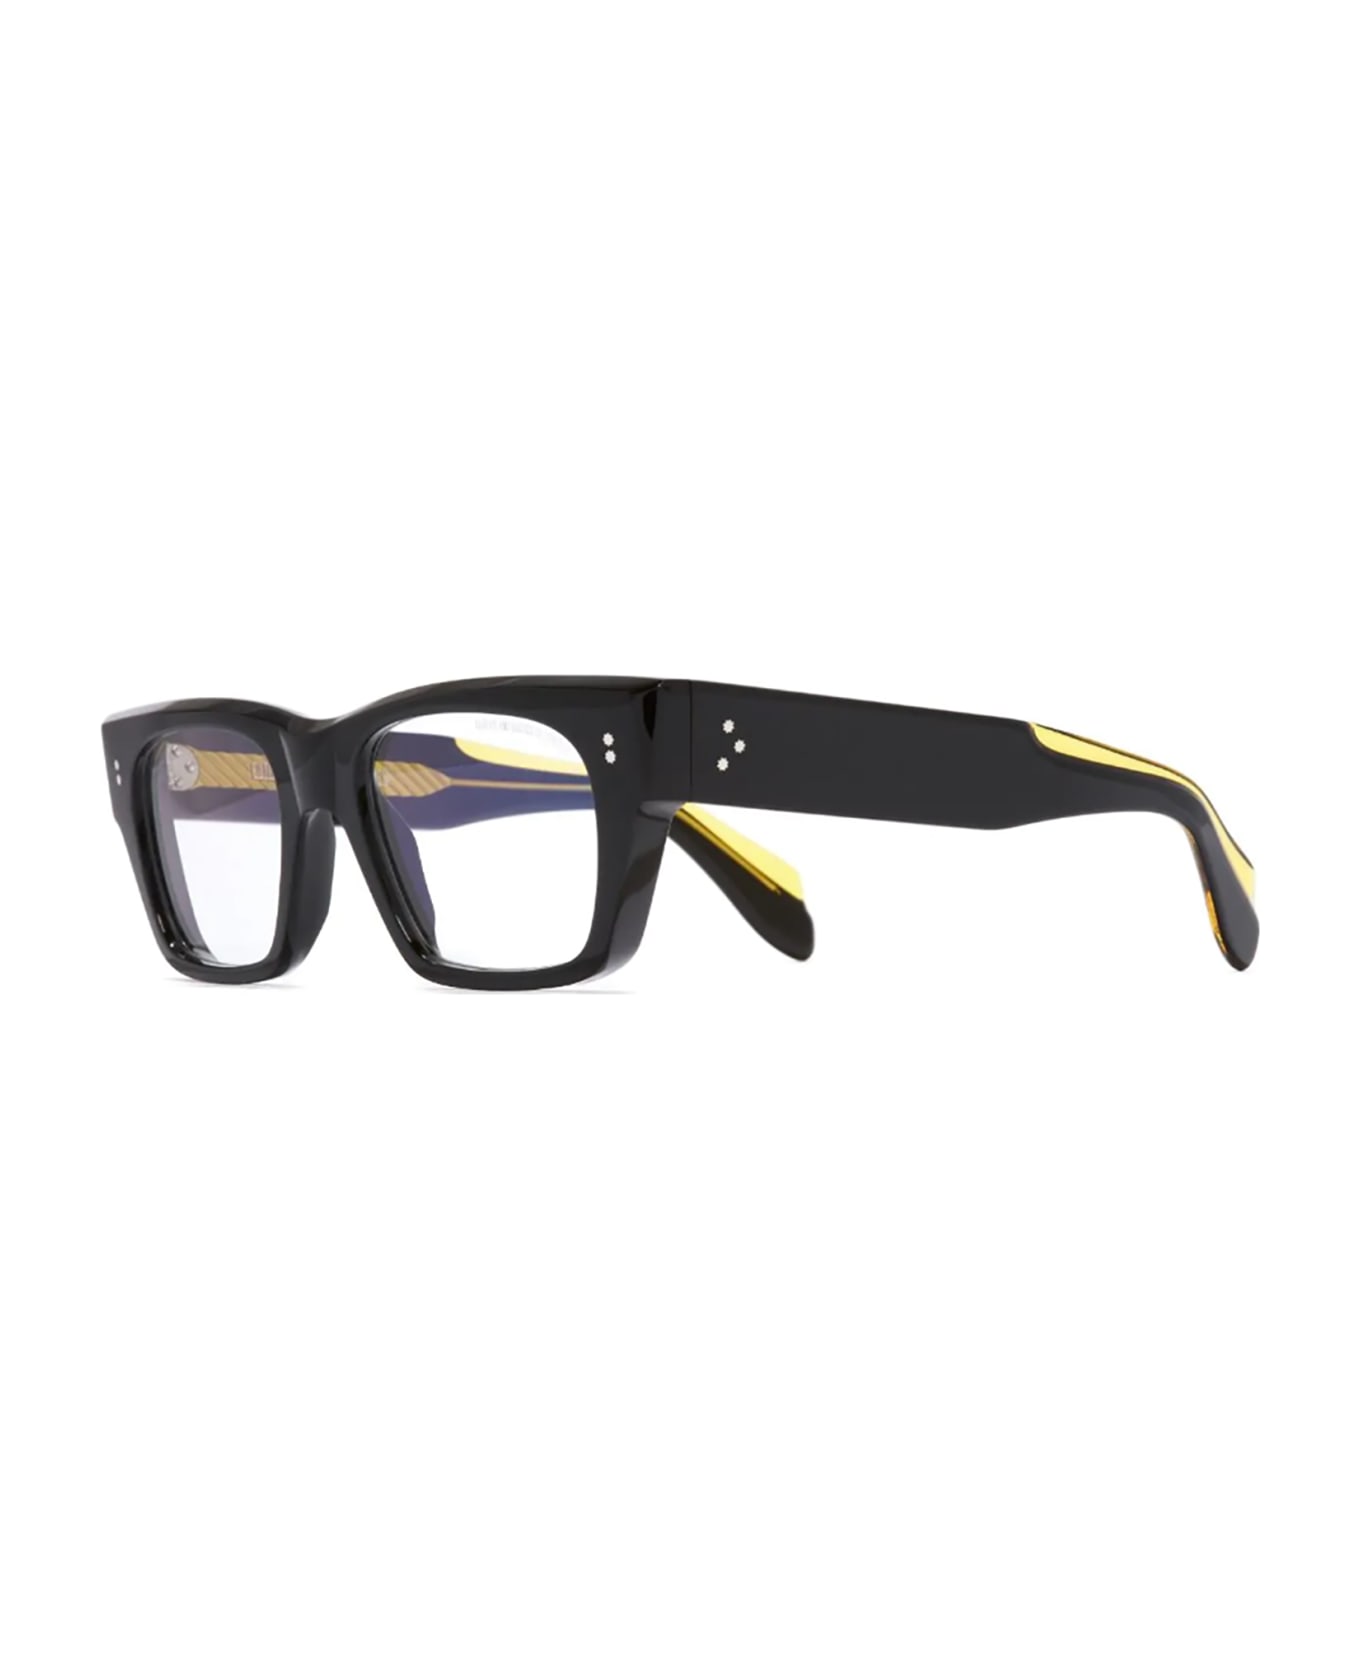 Cutler and Gross 9690 Eyewear - Black